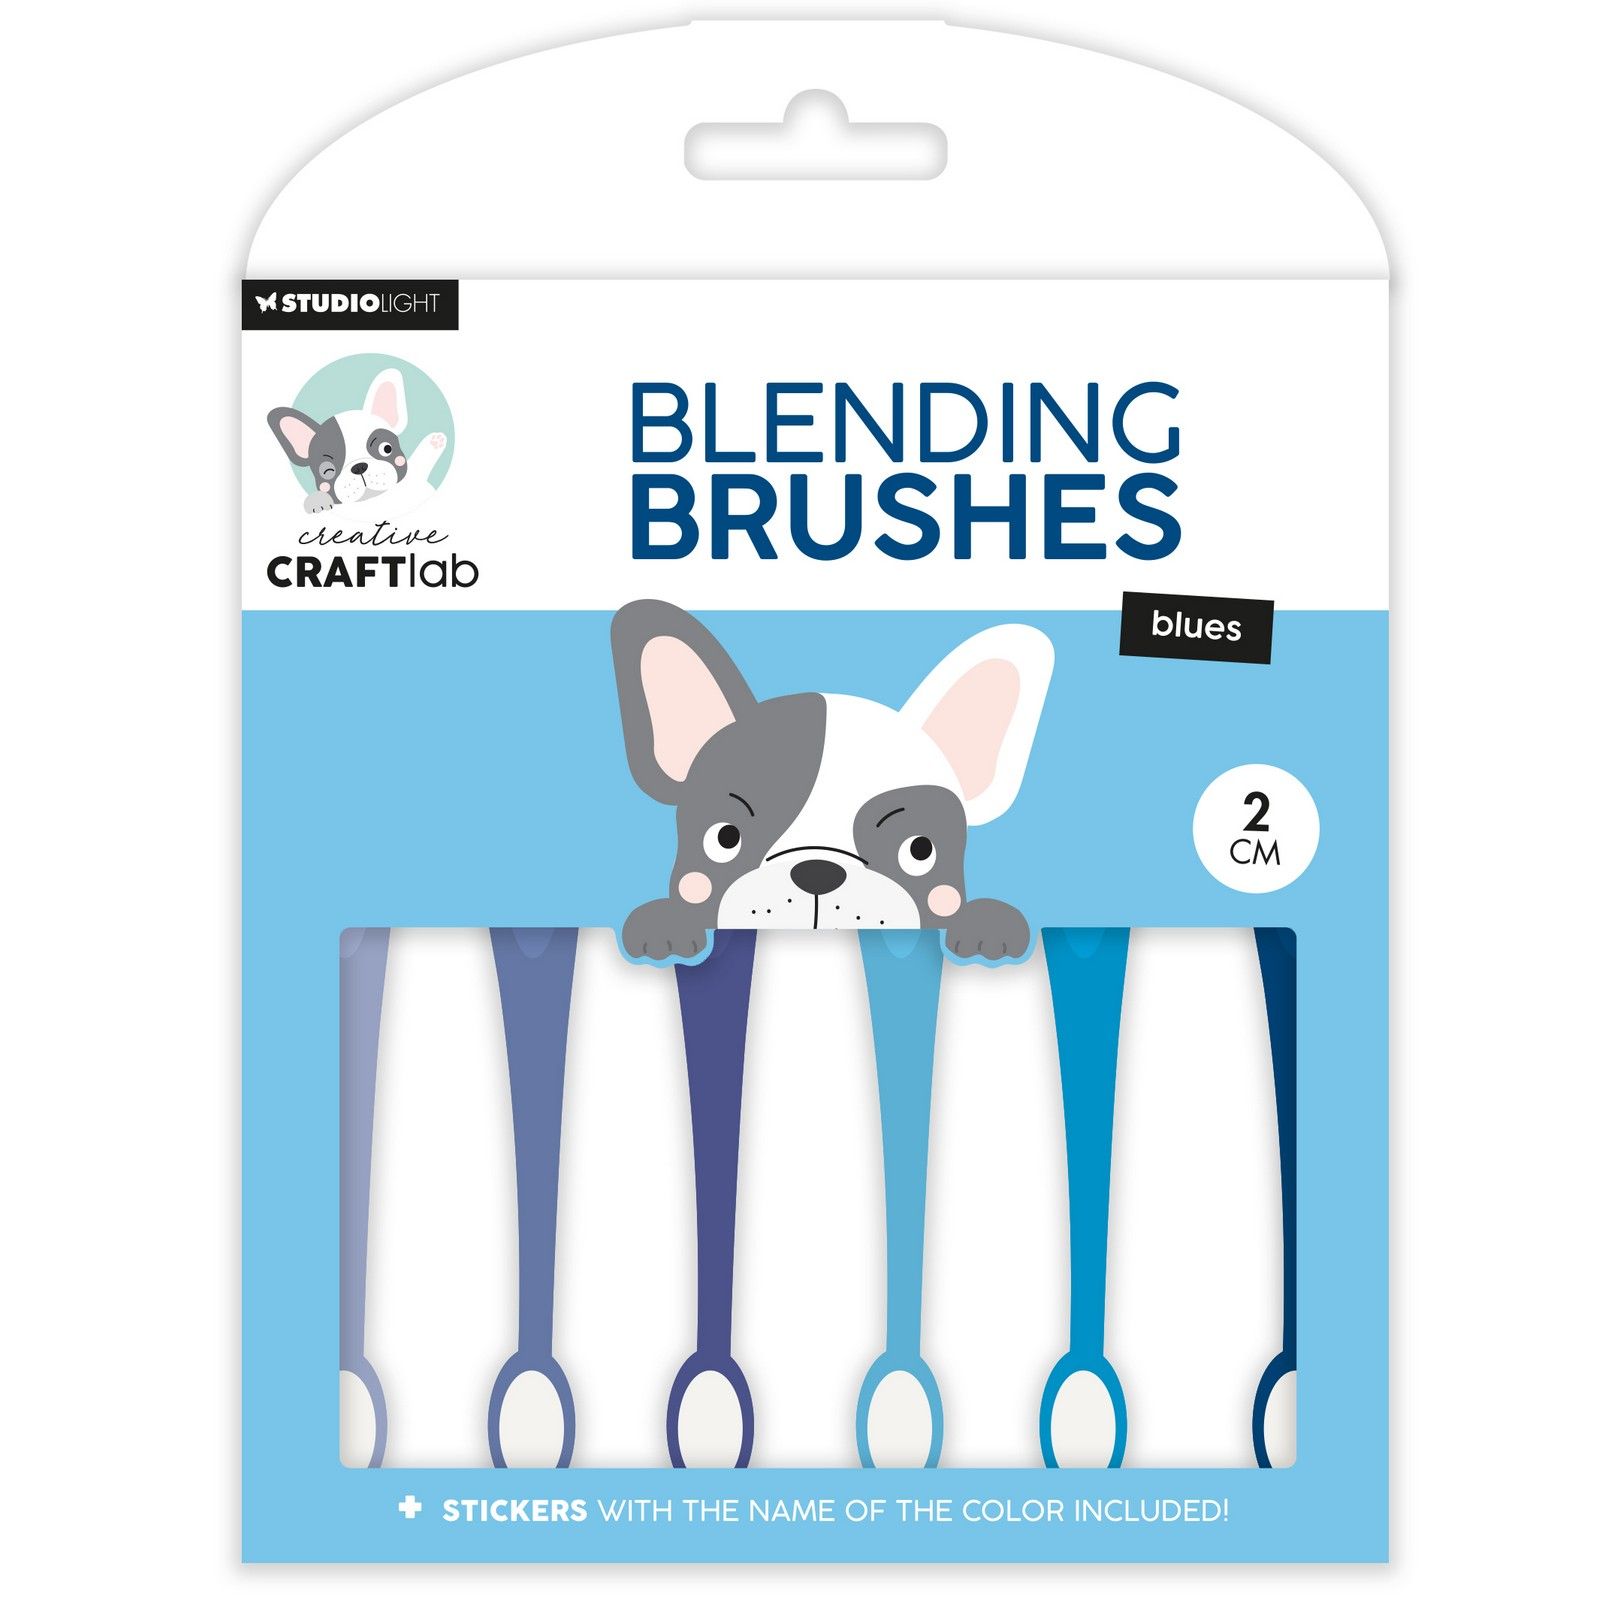 Creative Craftlab • Essentials Blending Brushes 2cm Soft Brush Blues